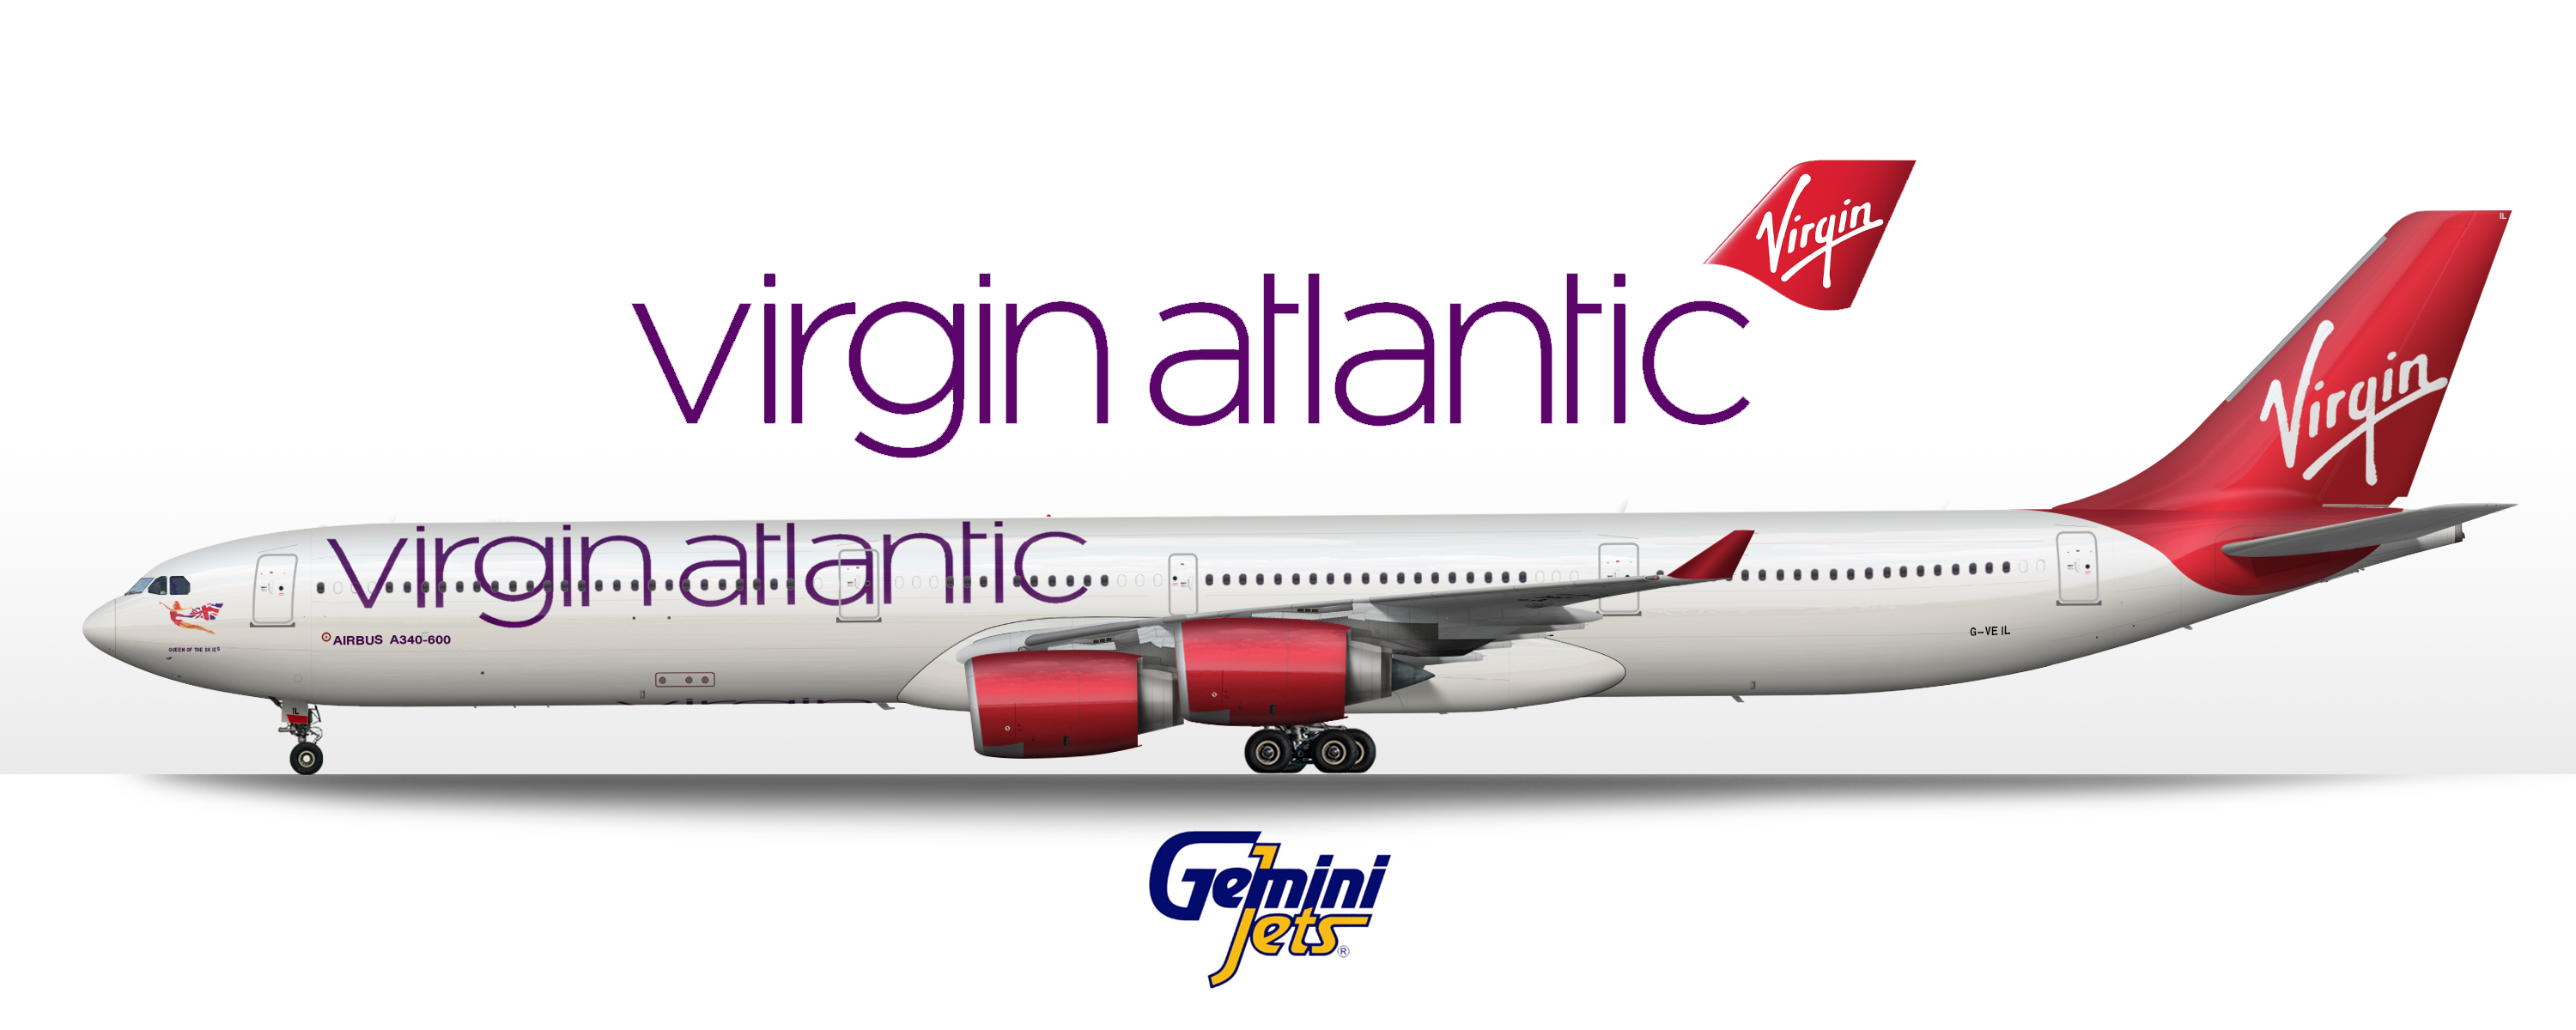 Virgin Atlantic A340 600 1:400 Scale model recreations Gallery  Airline Empires